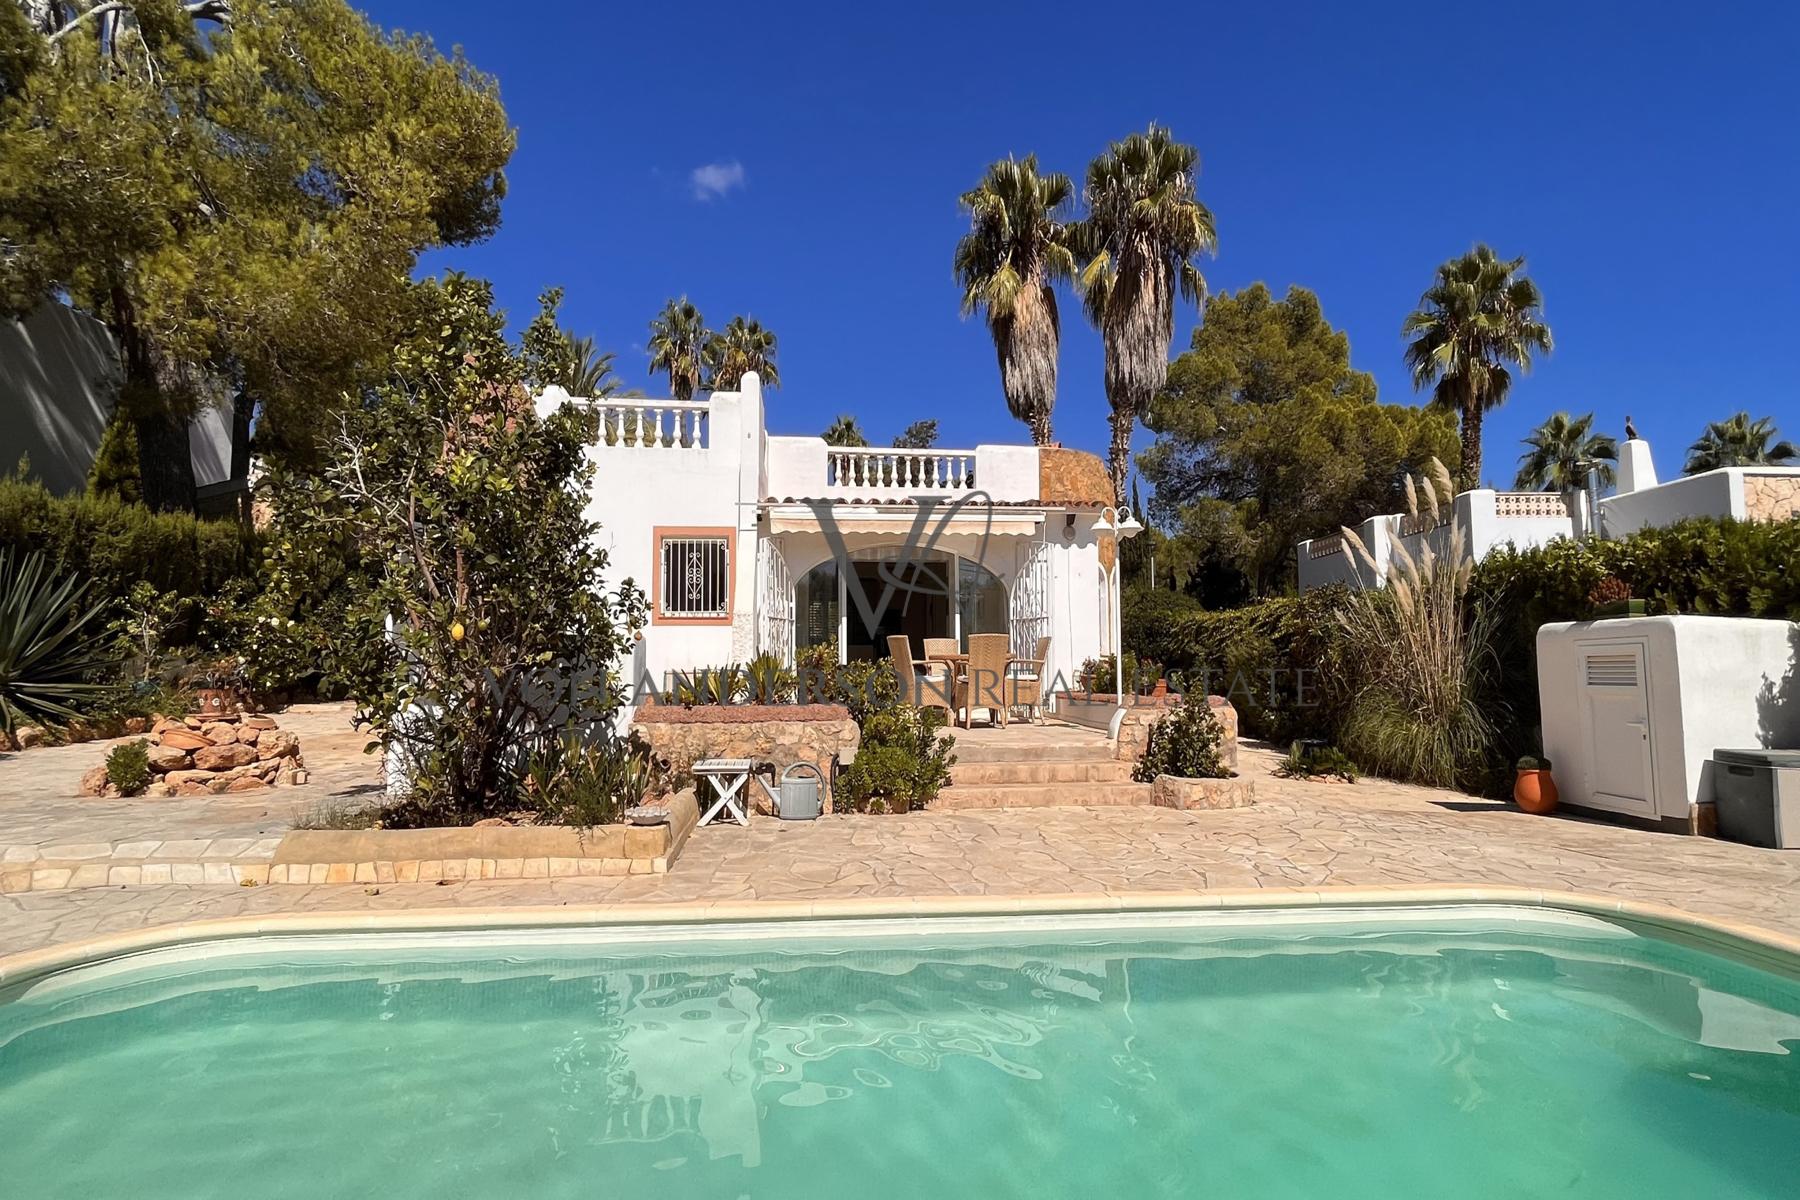 Enchanting Villa Set in Picturesque Area Near Beaches of the North Coast, ref. VA1045, for sale in Ibiza by Von Anderson Real Estate